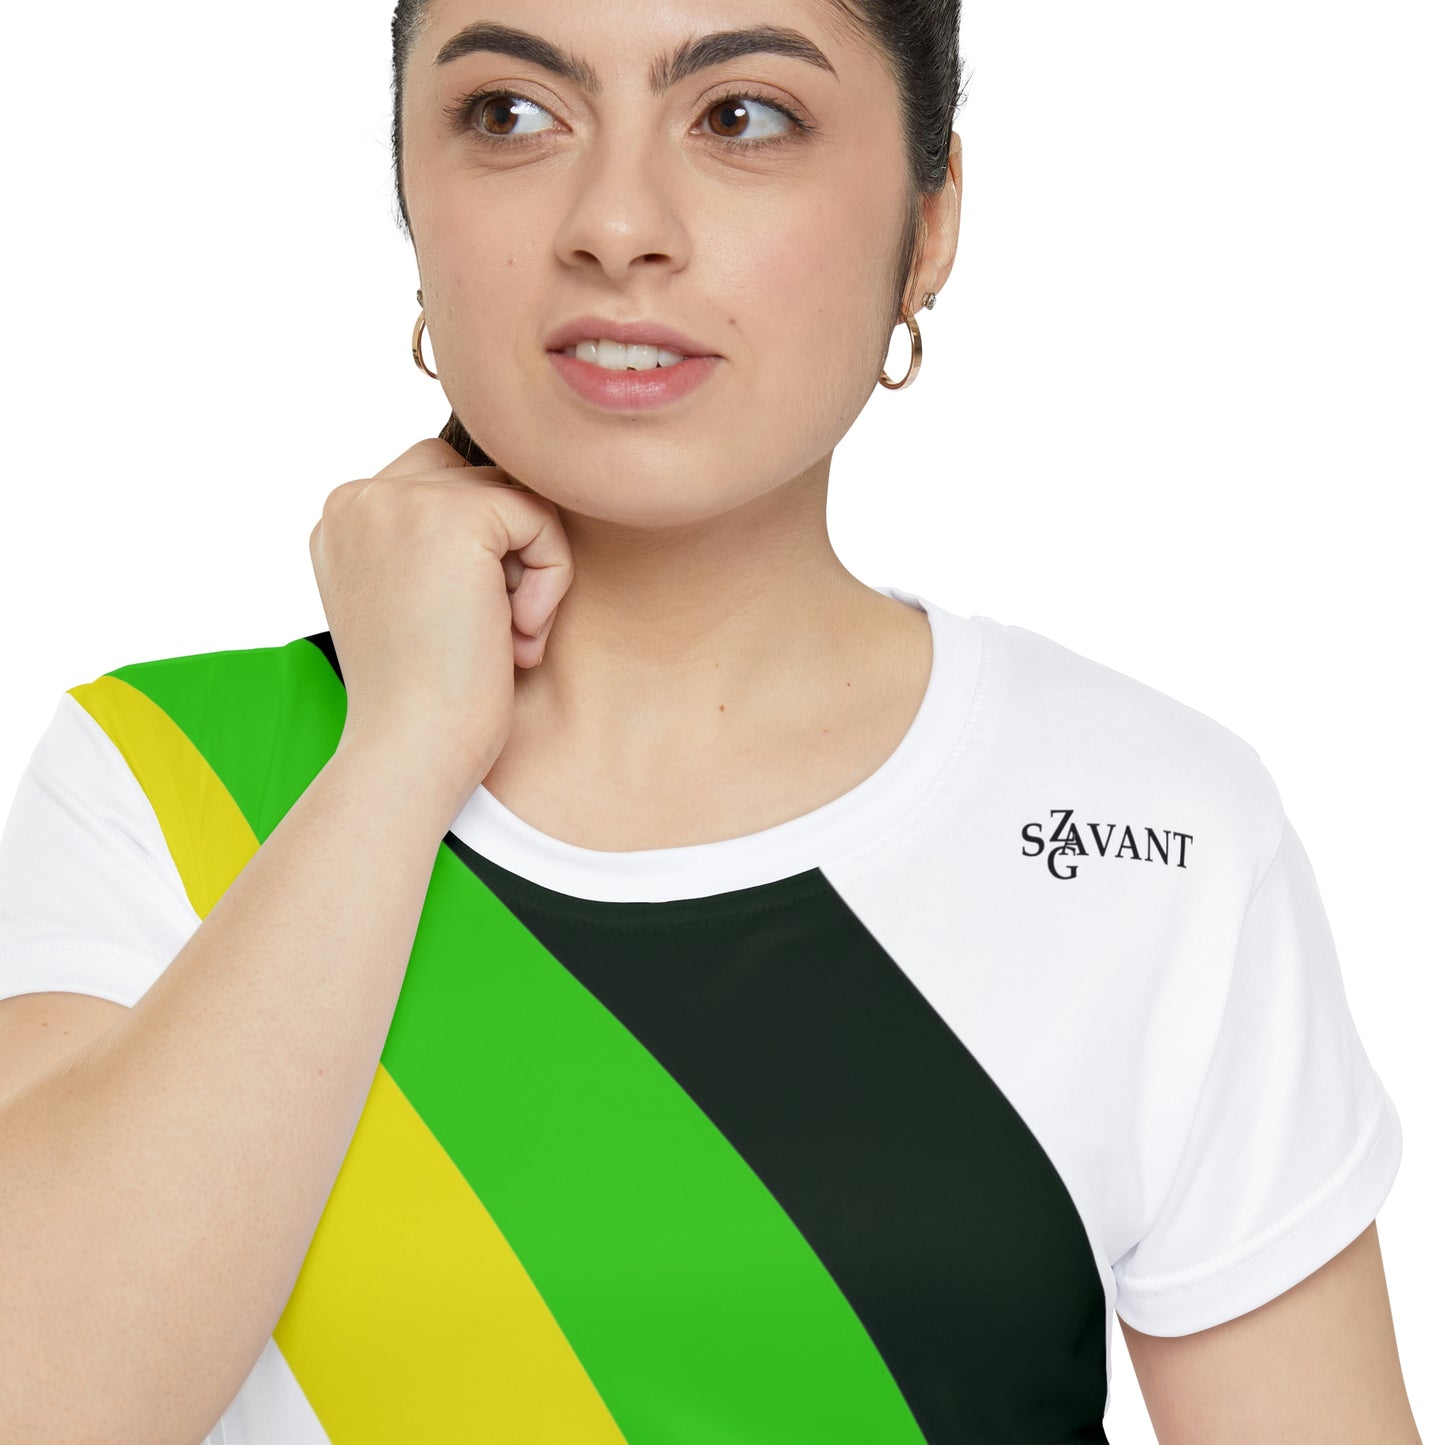 Jamaican Color Short Sleeve T-shirt - Women's (White)